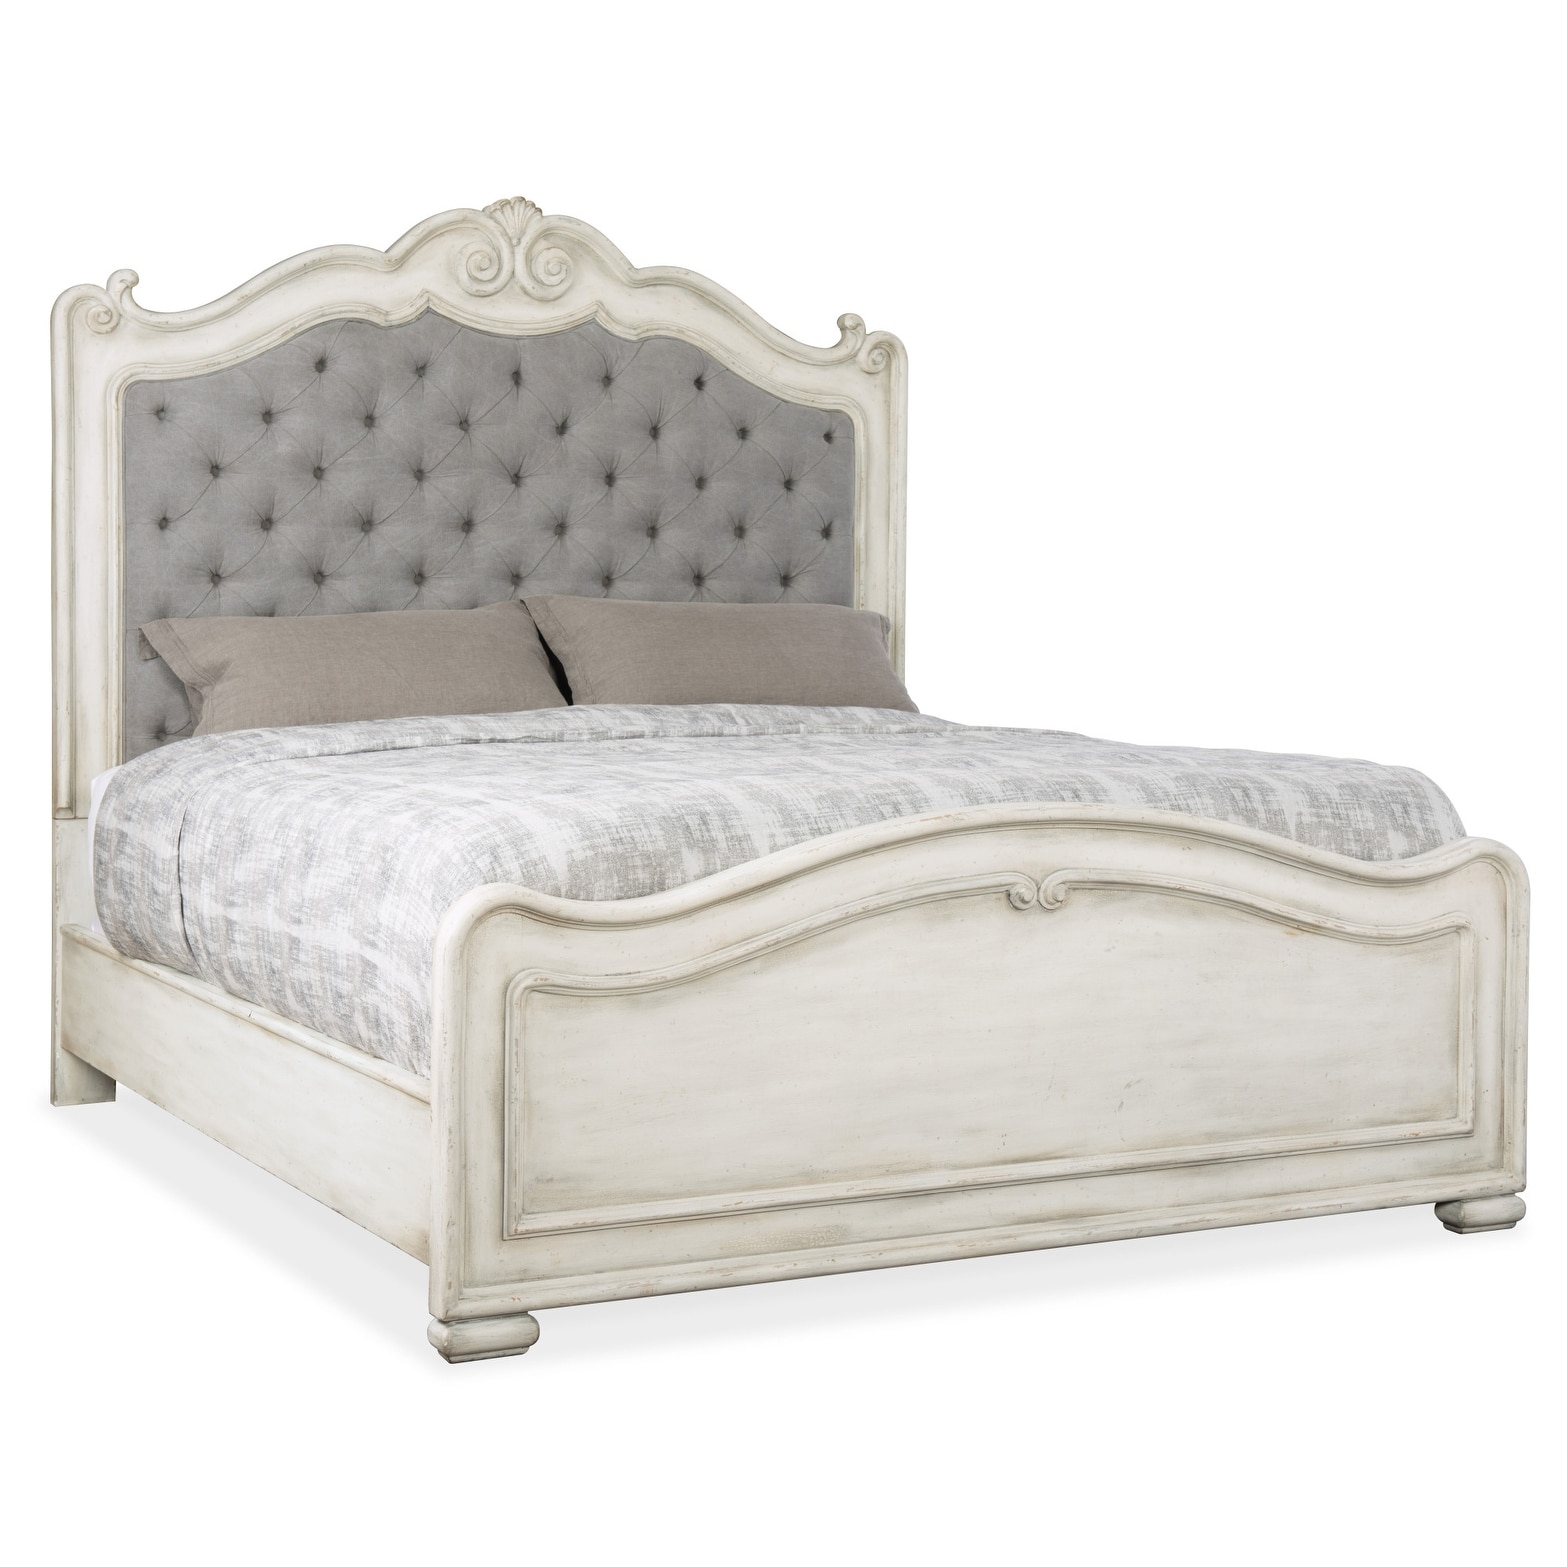 Hooker Furniture 1610 90266 Wh Arabella King Maple Upholstered Panel Distressed White Crackle Overstock 27196386